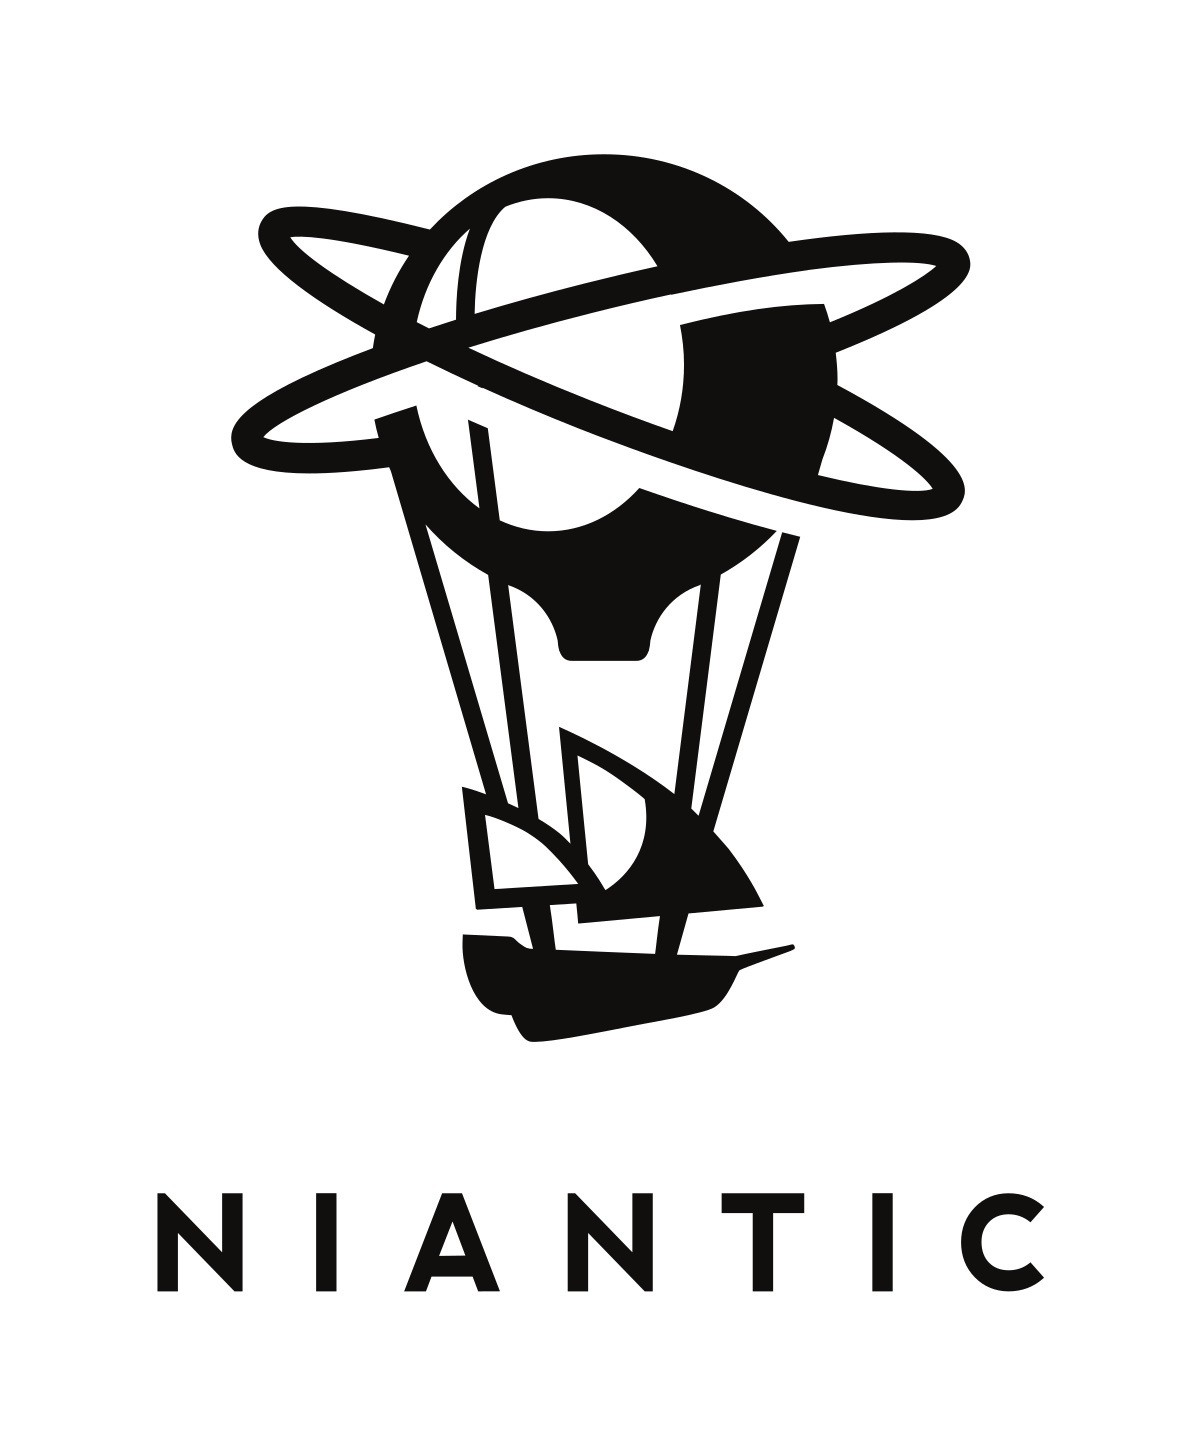 《Pokemon GO》开发商 Niantic 宣布旗下游戏将于俄罗斯、白俄罗斯停止下载及服务